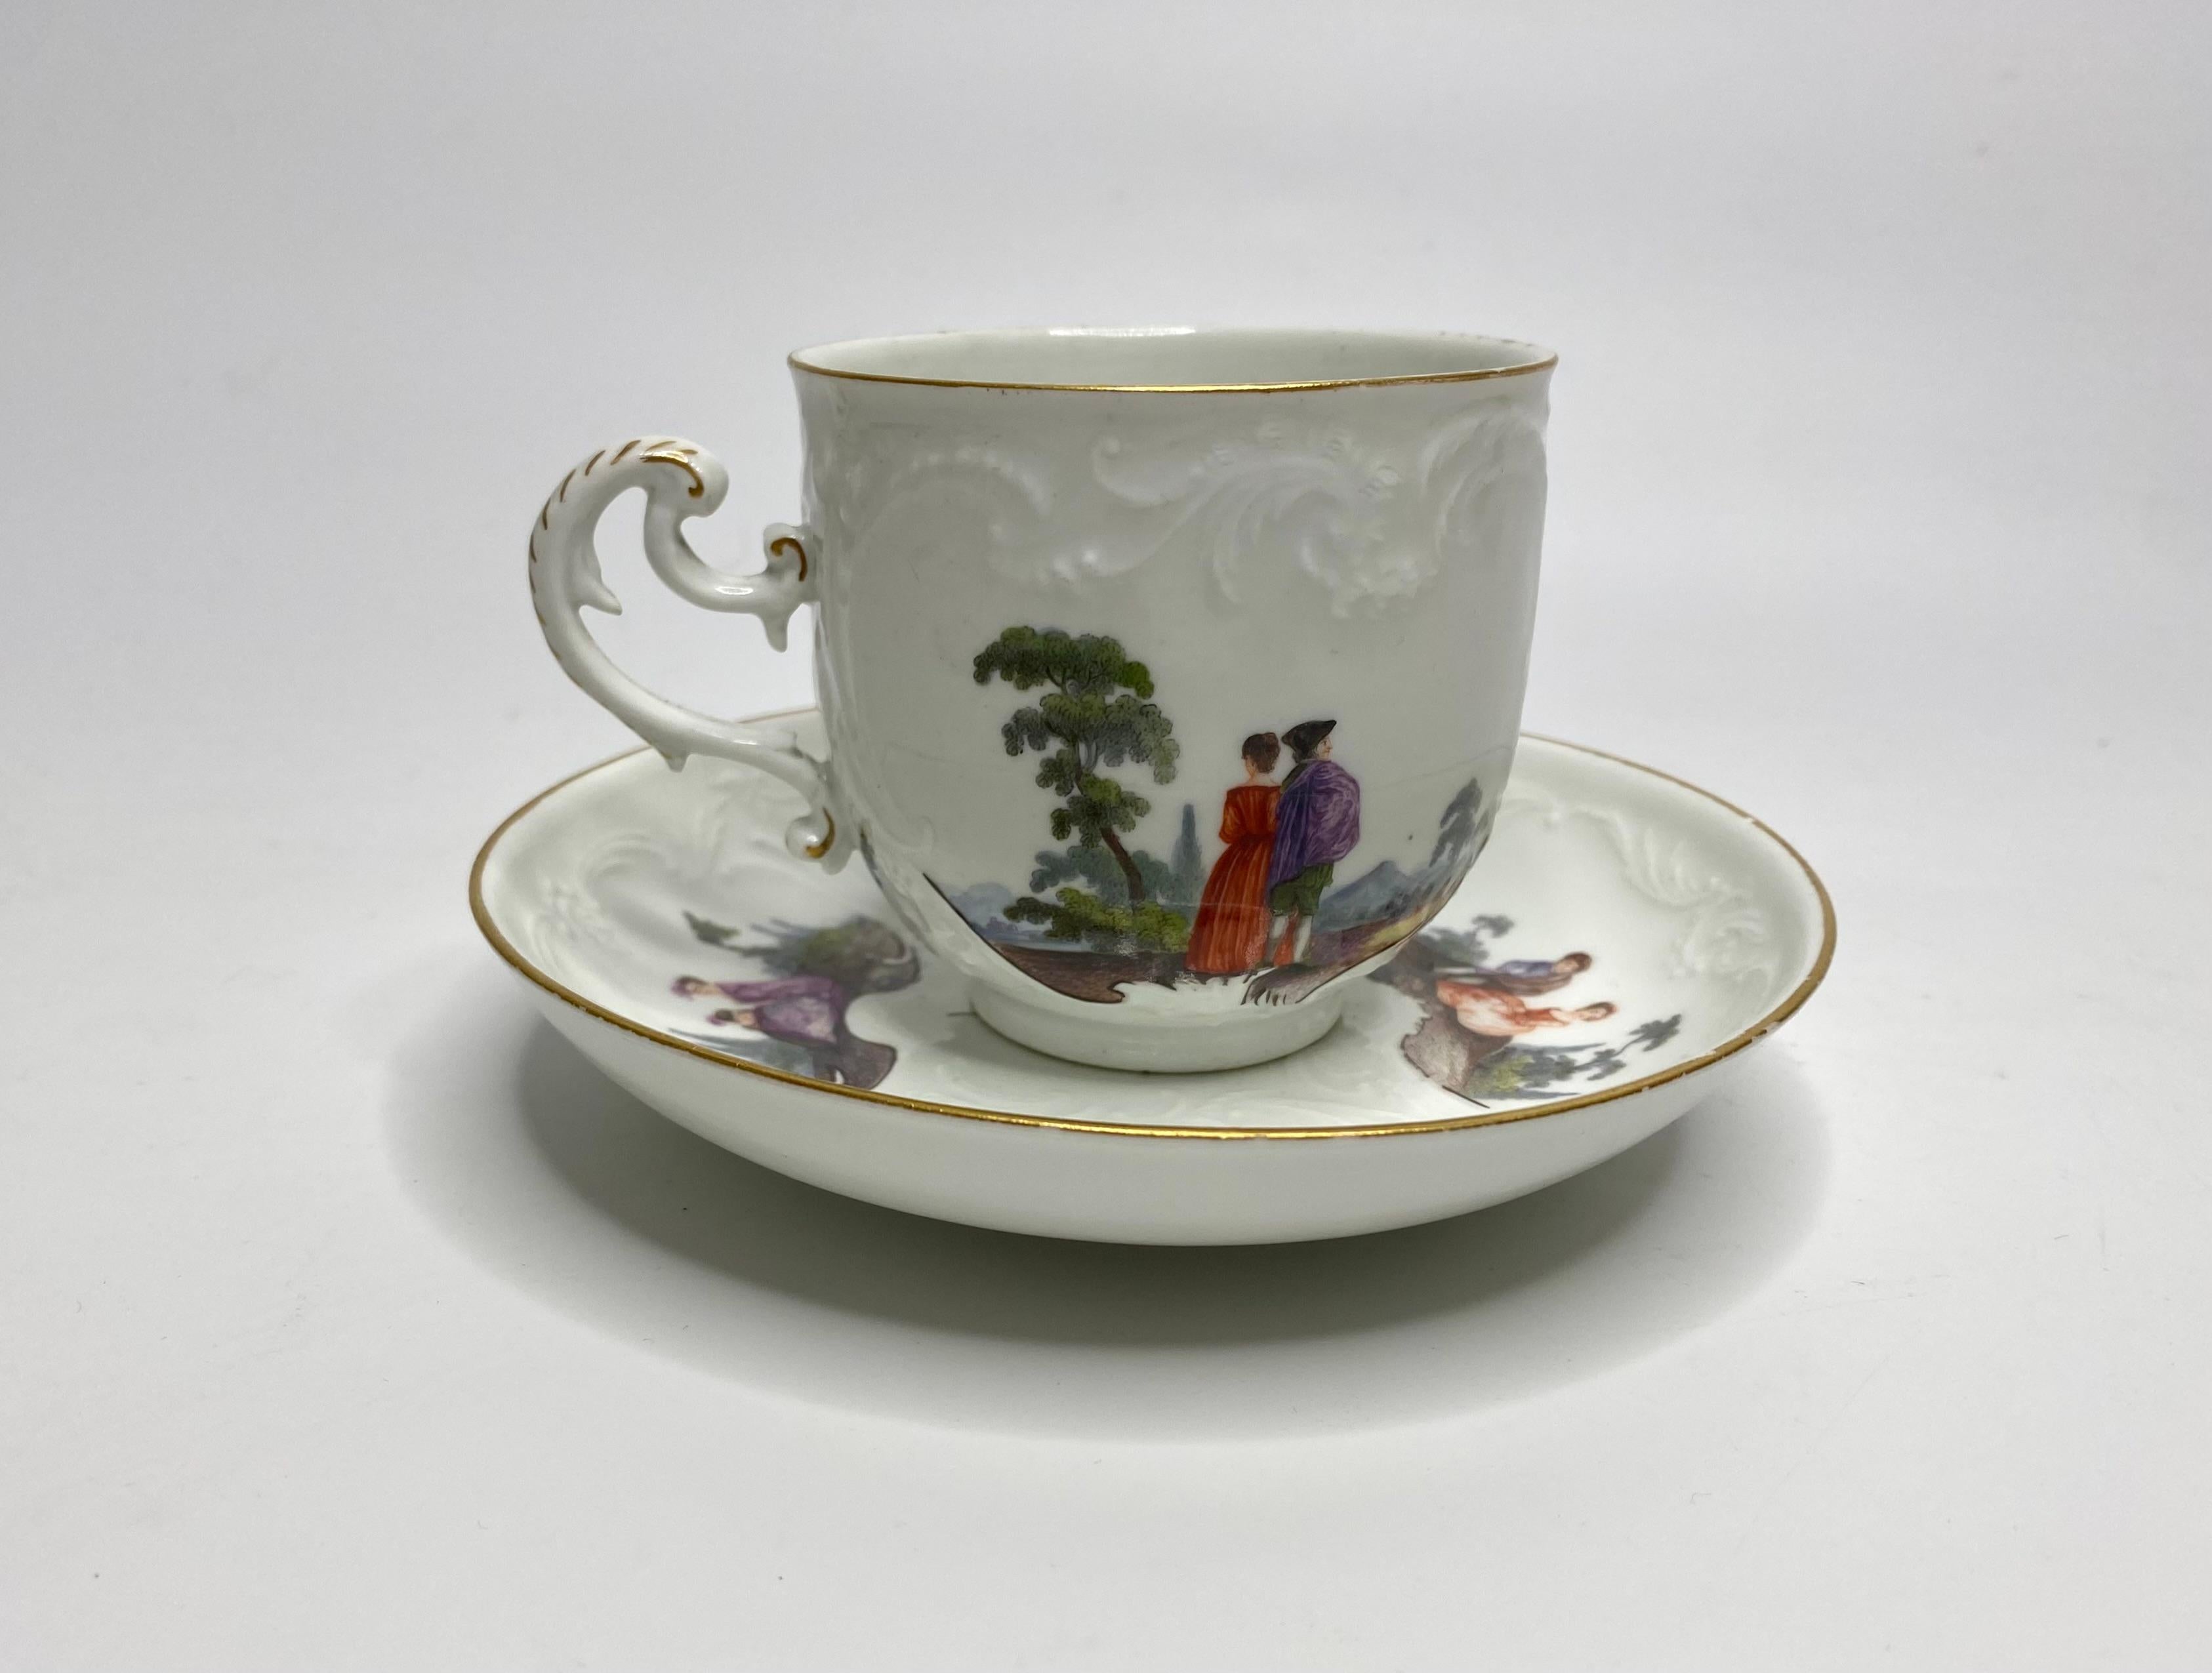 Porcelain Meissen porcelain cup and saucer, c. 1740.